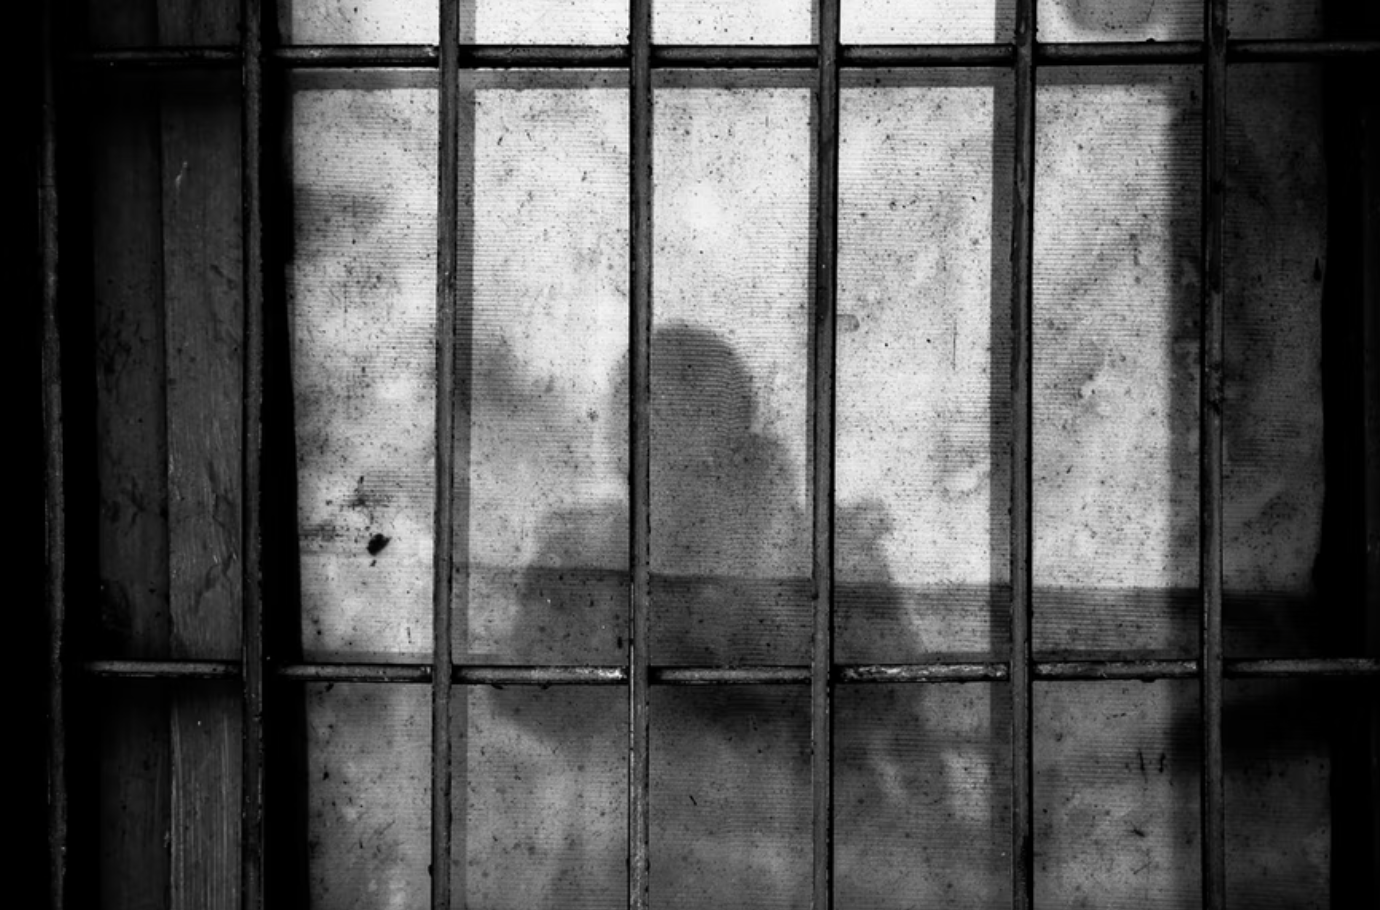 Shadow of person behind bars; image by Ye Jinghan, via Unsplash.com.